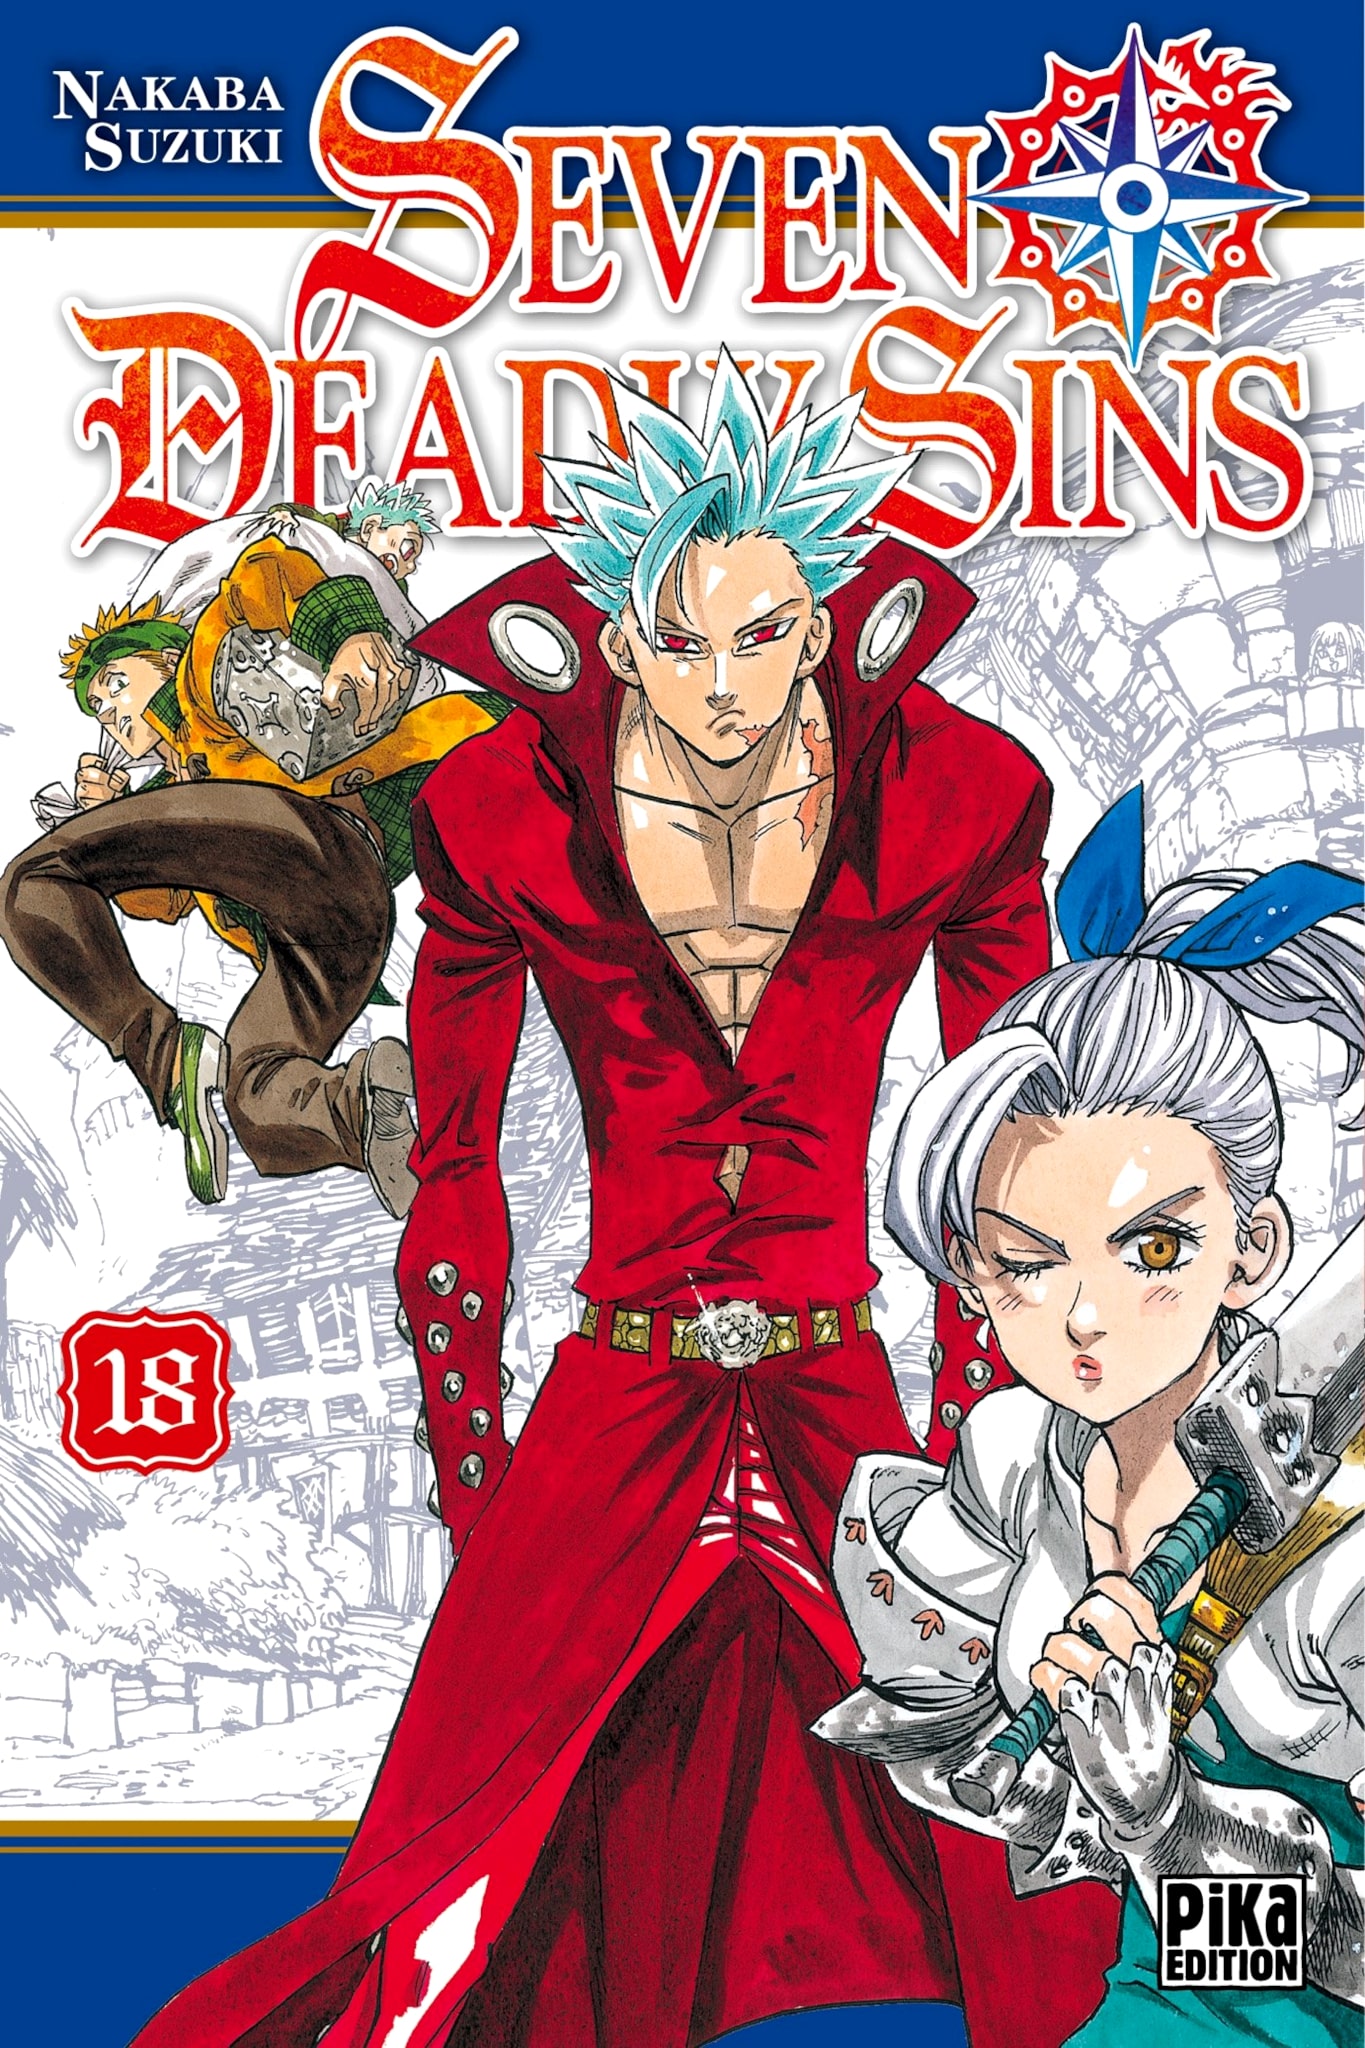 Tome 18 du manga The Seven Deadly Sins